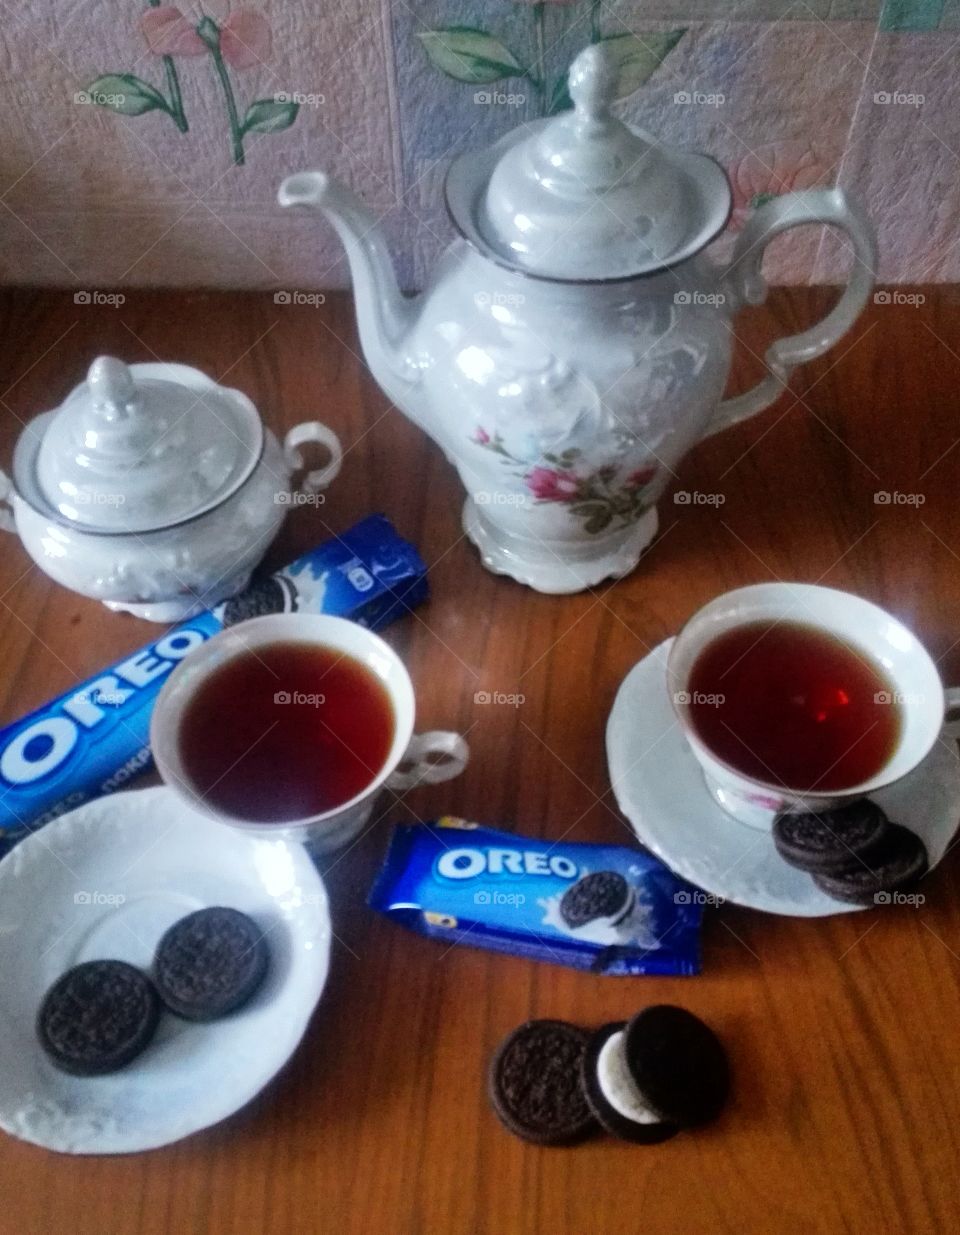 Tea with delicious Oreo cookies